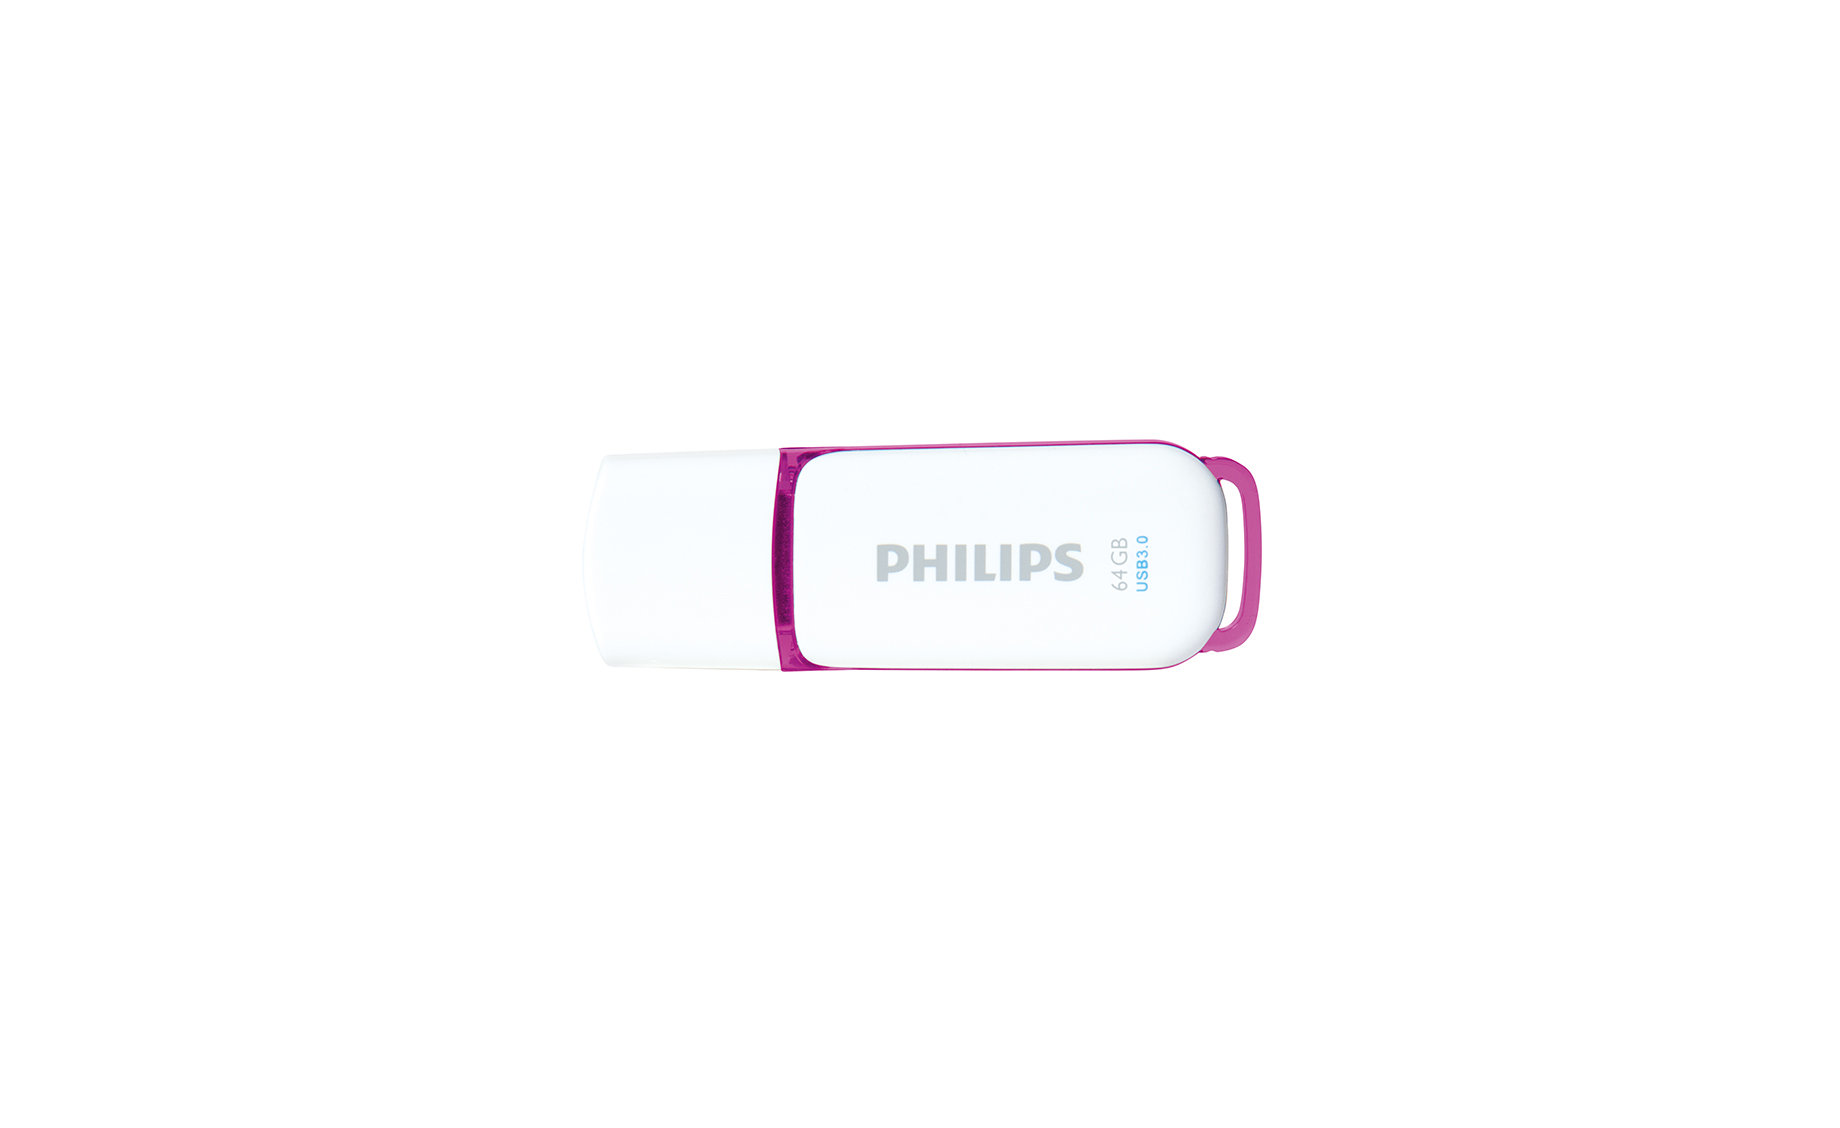 Philips PHMMD64GBS200U3 Snow Edition USB memorija 64GB